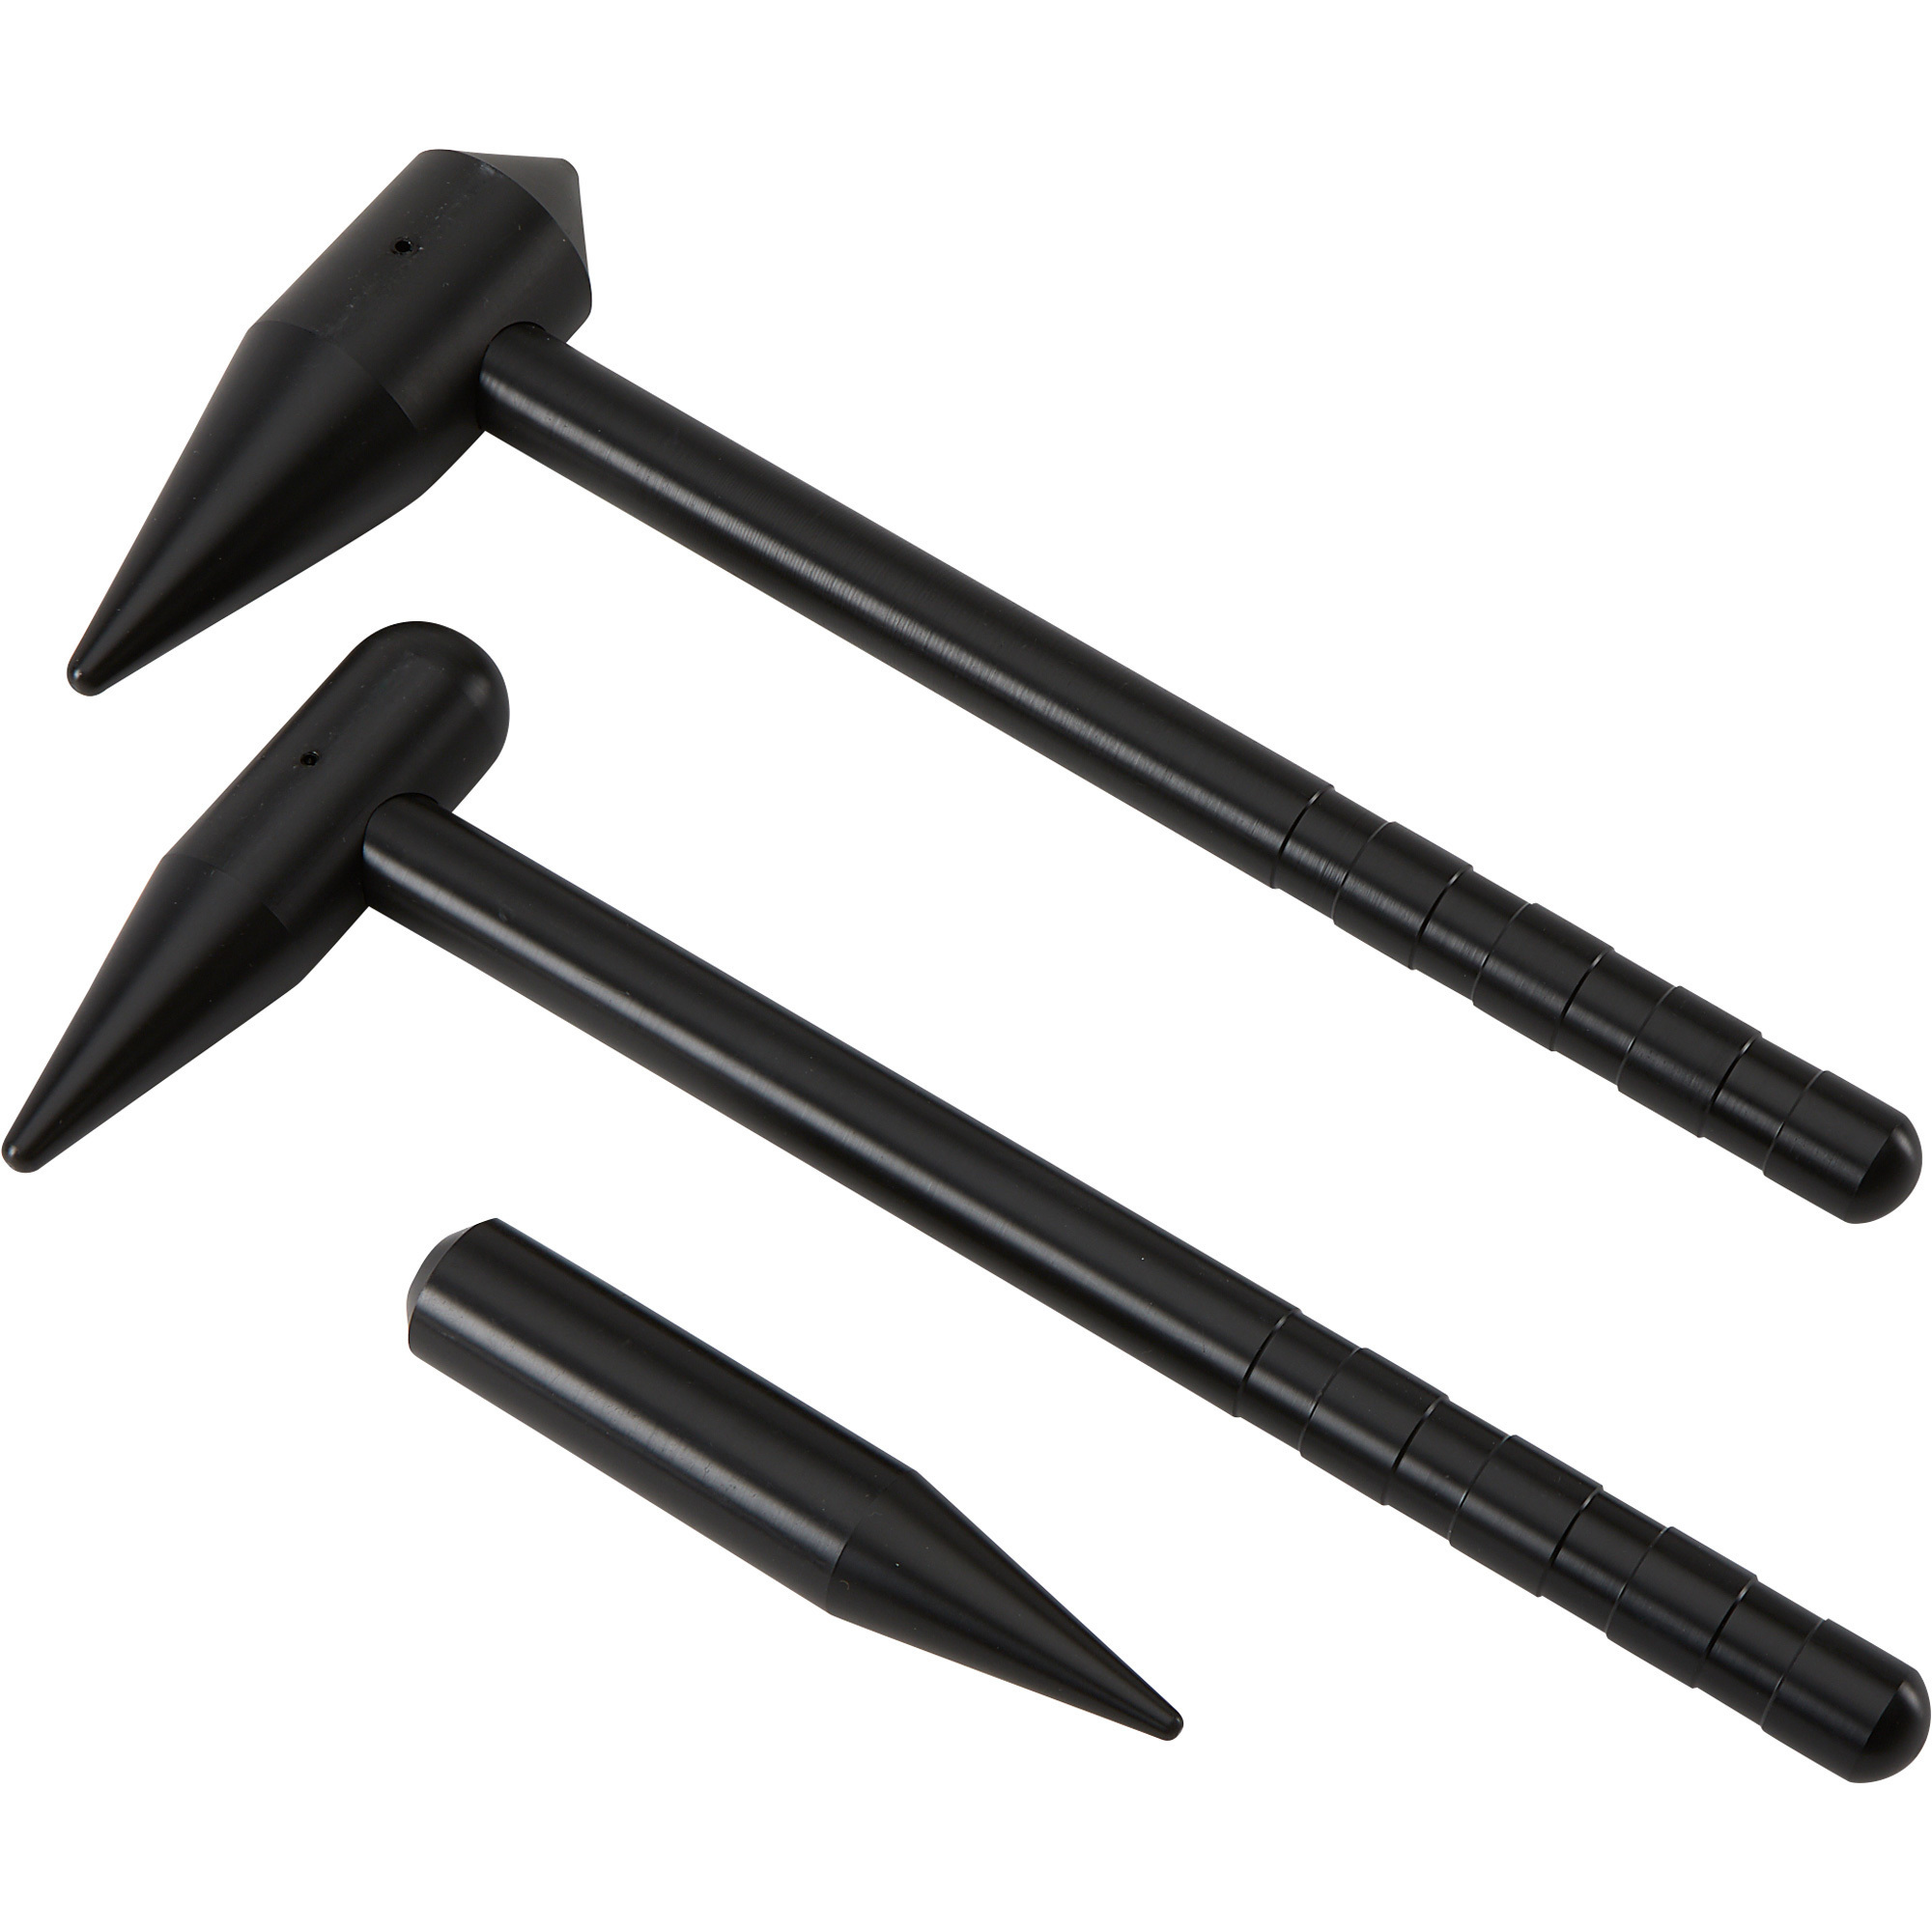 Ironton 3-Piece Rubber Hammer Set